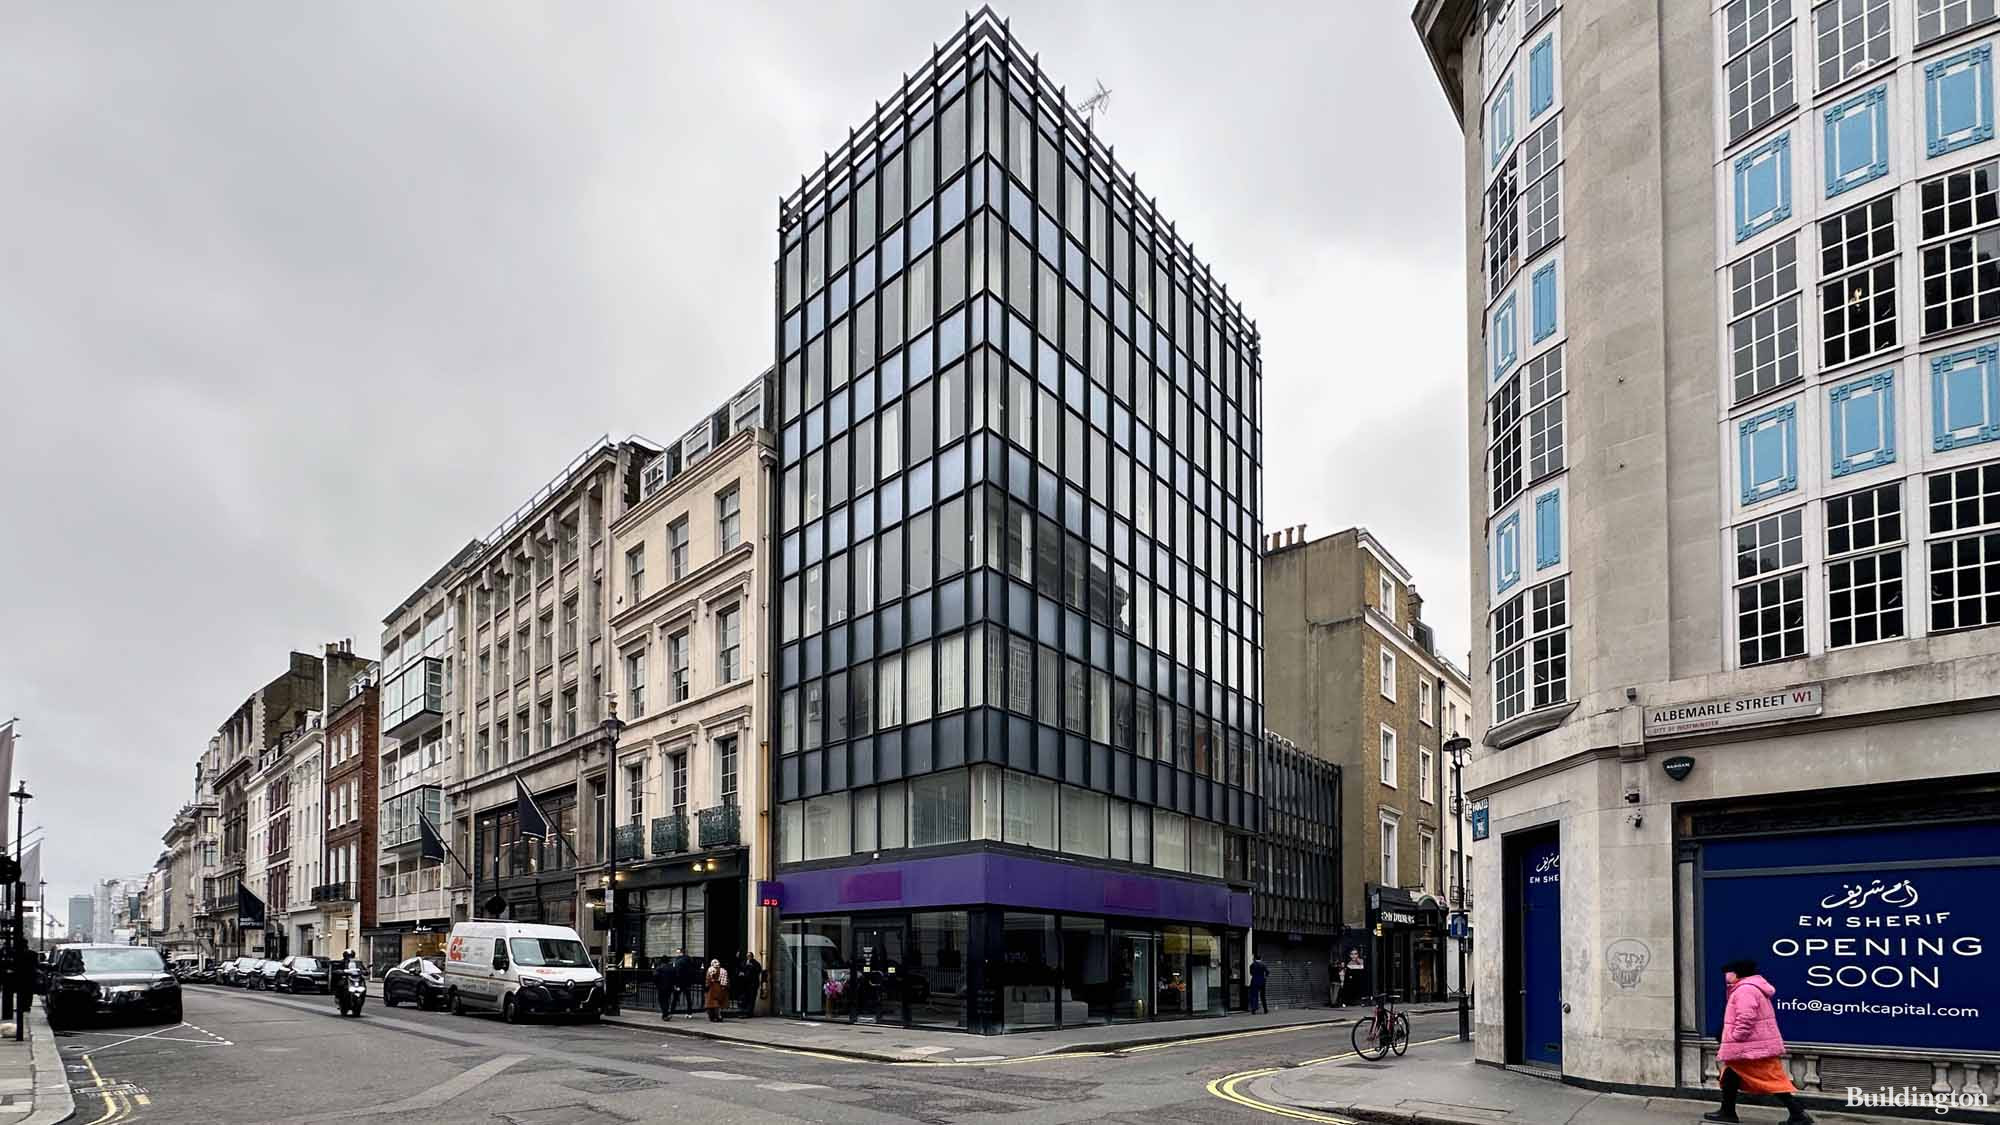 41 Albemarle Street building designed by Peter Moro in Mayfair, London W1.